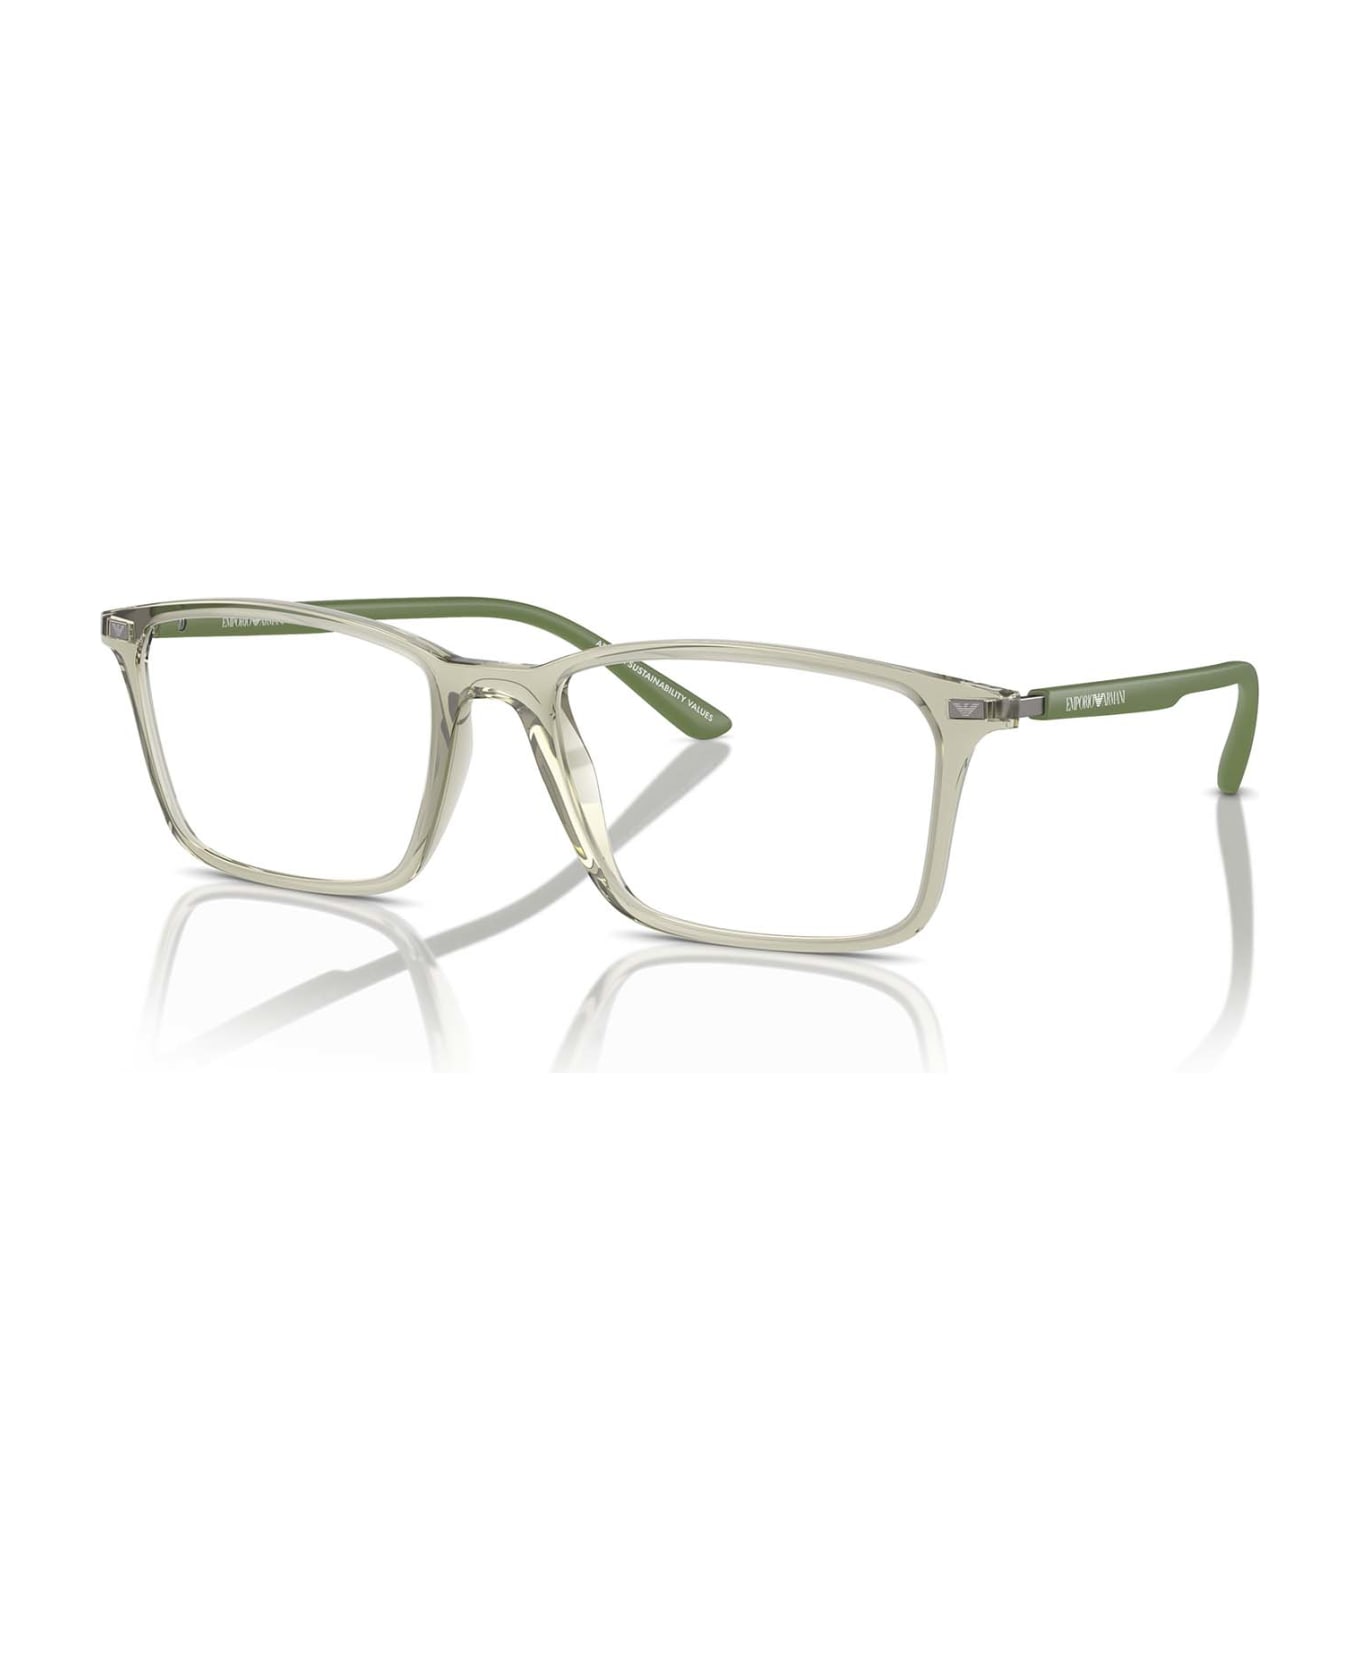 Emporio Armani Ea3237 Shiny Transparent Green Glasses - Shiny Transparent Green アイウェア